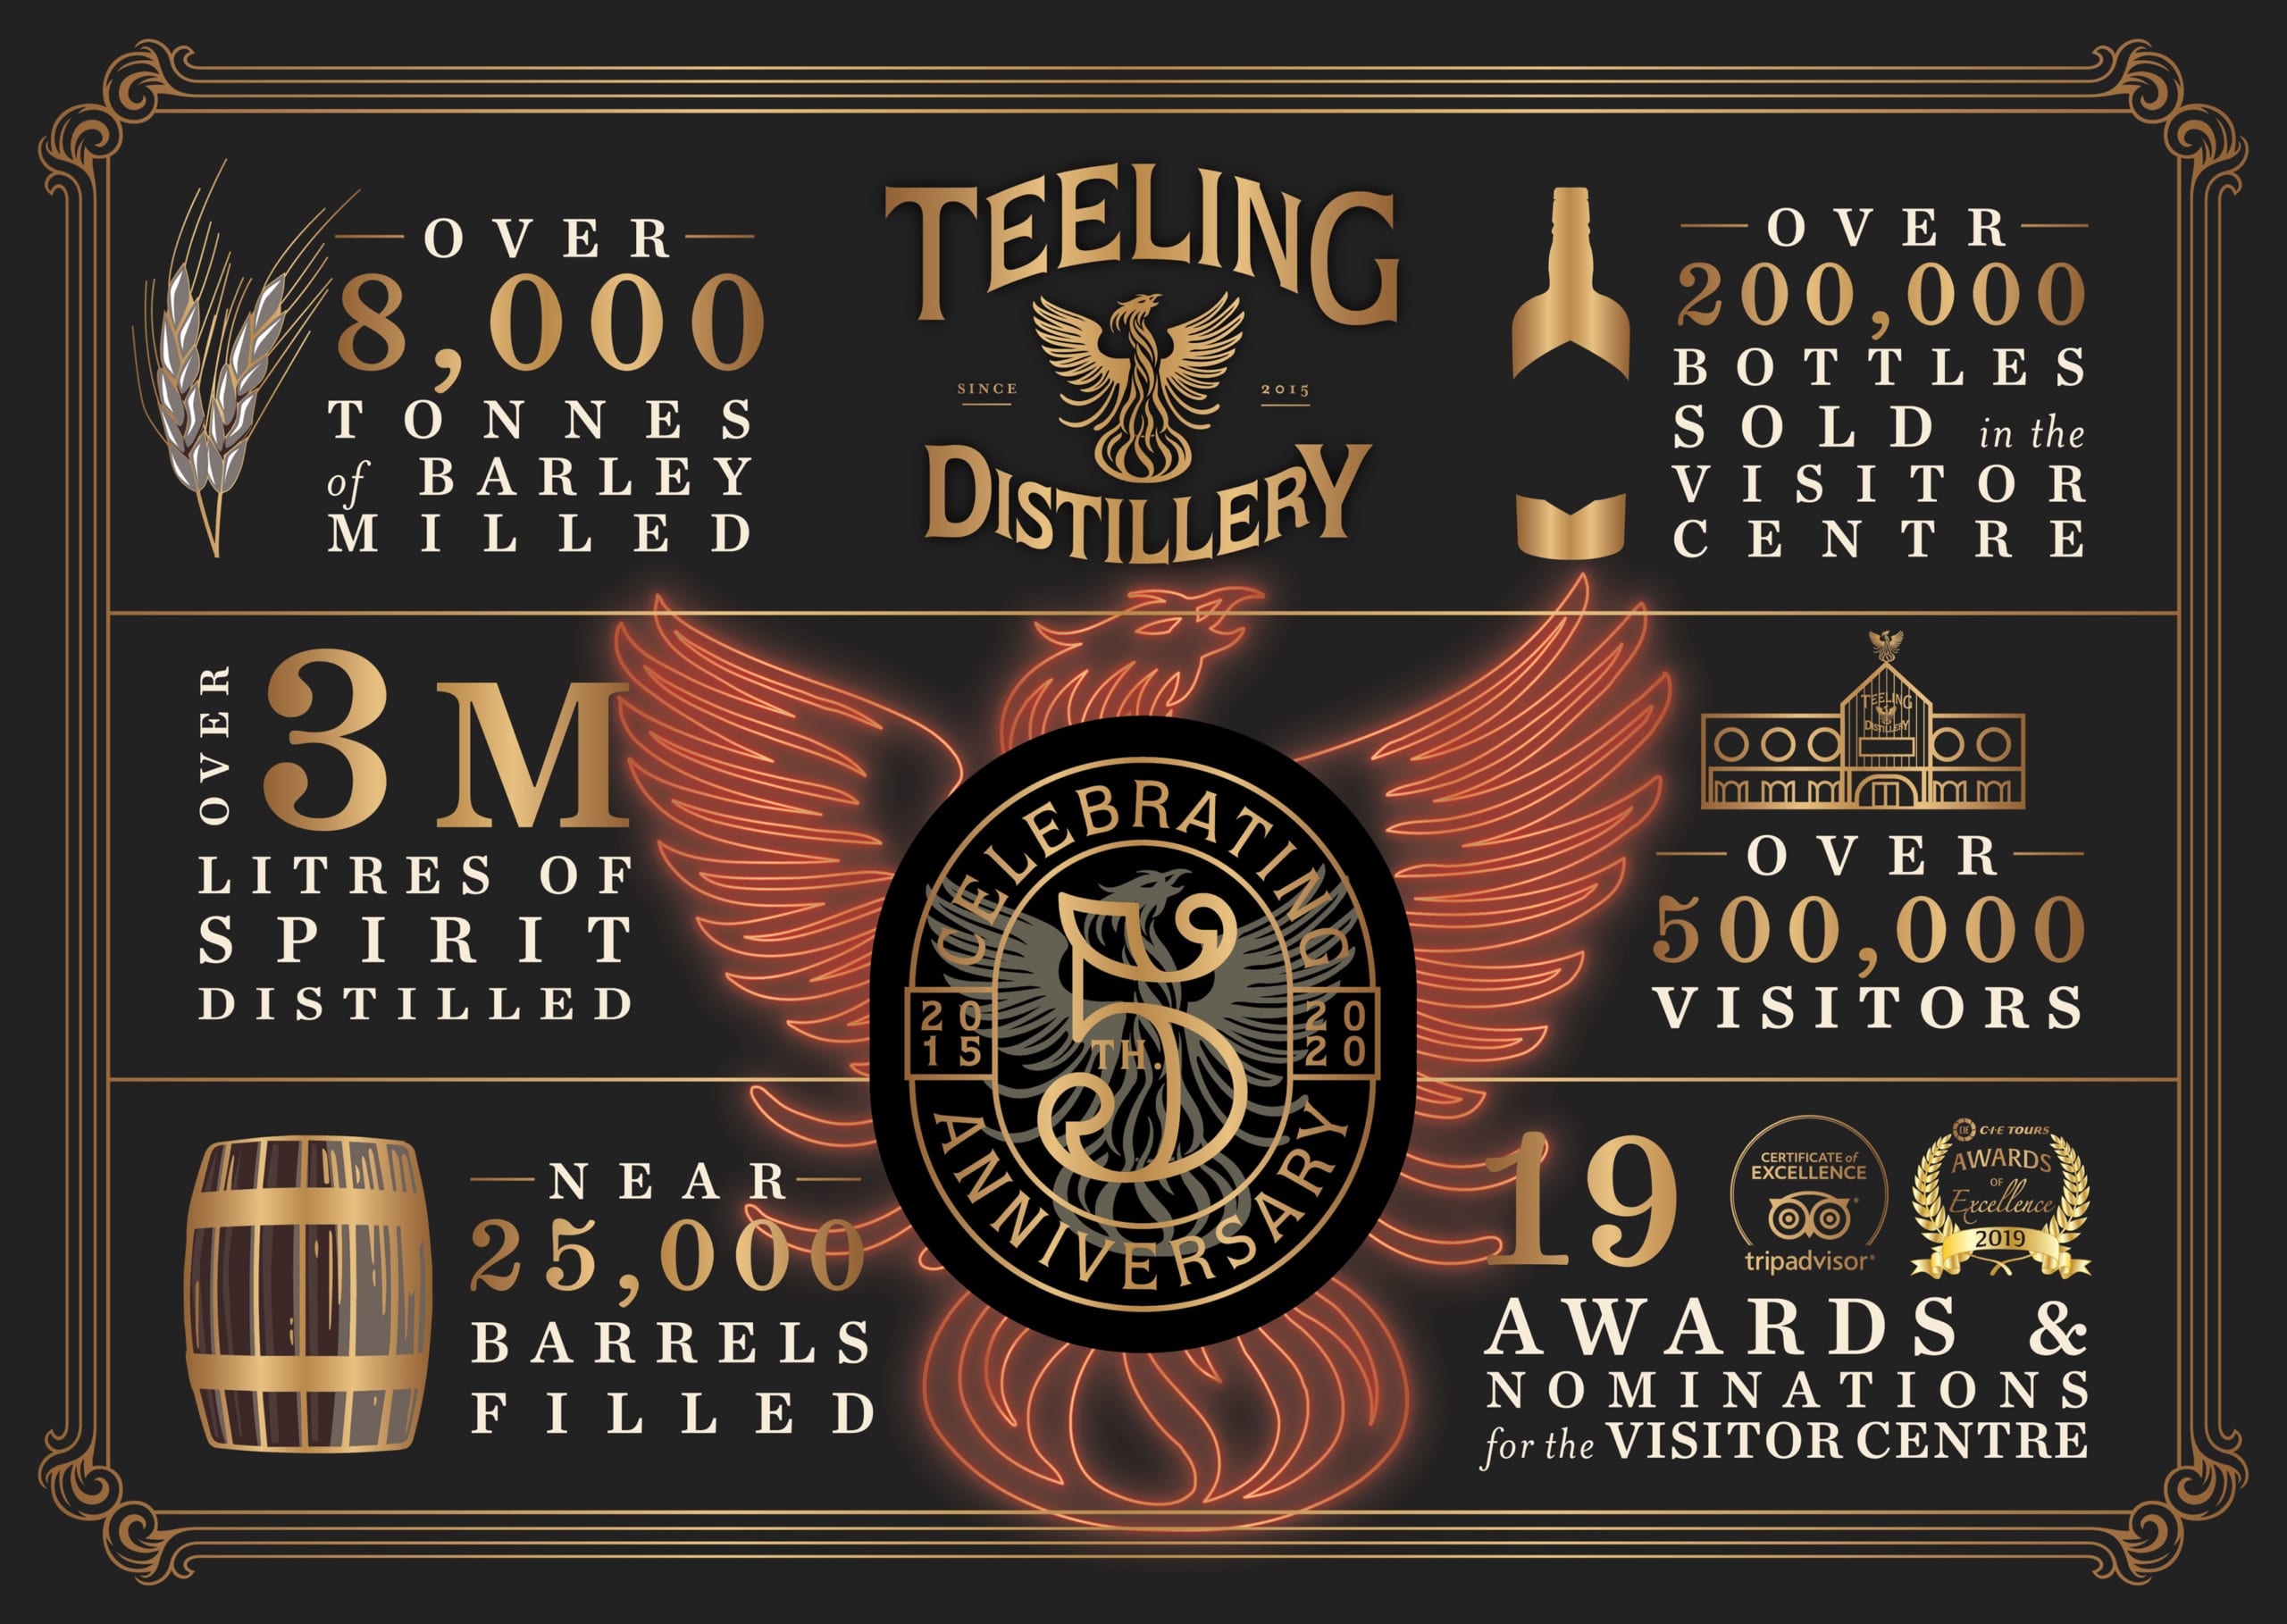 Teeling distillery anniversary